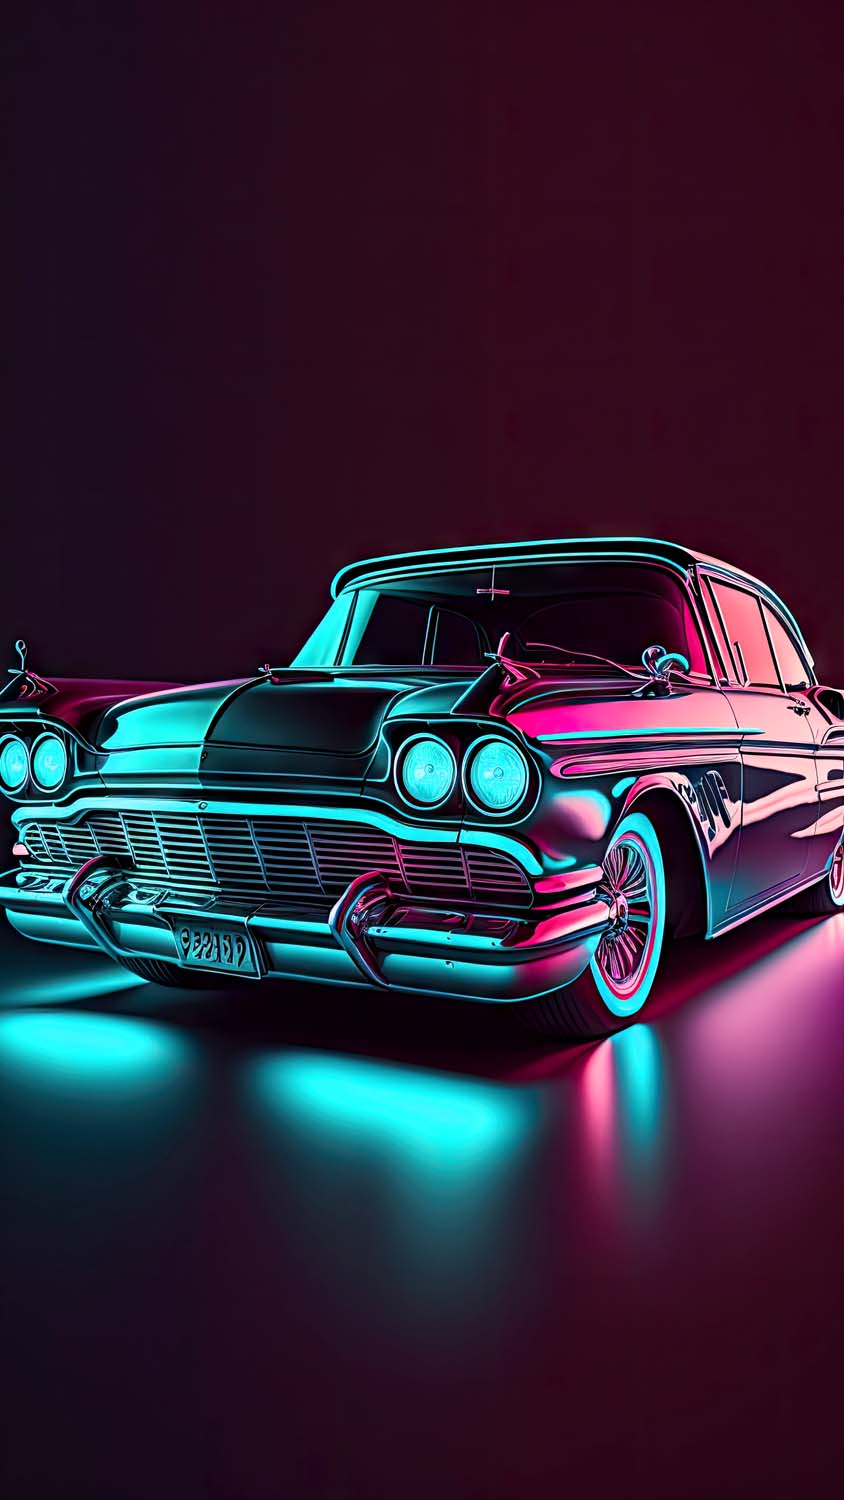 Neon Car Wallpaper 89 images